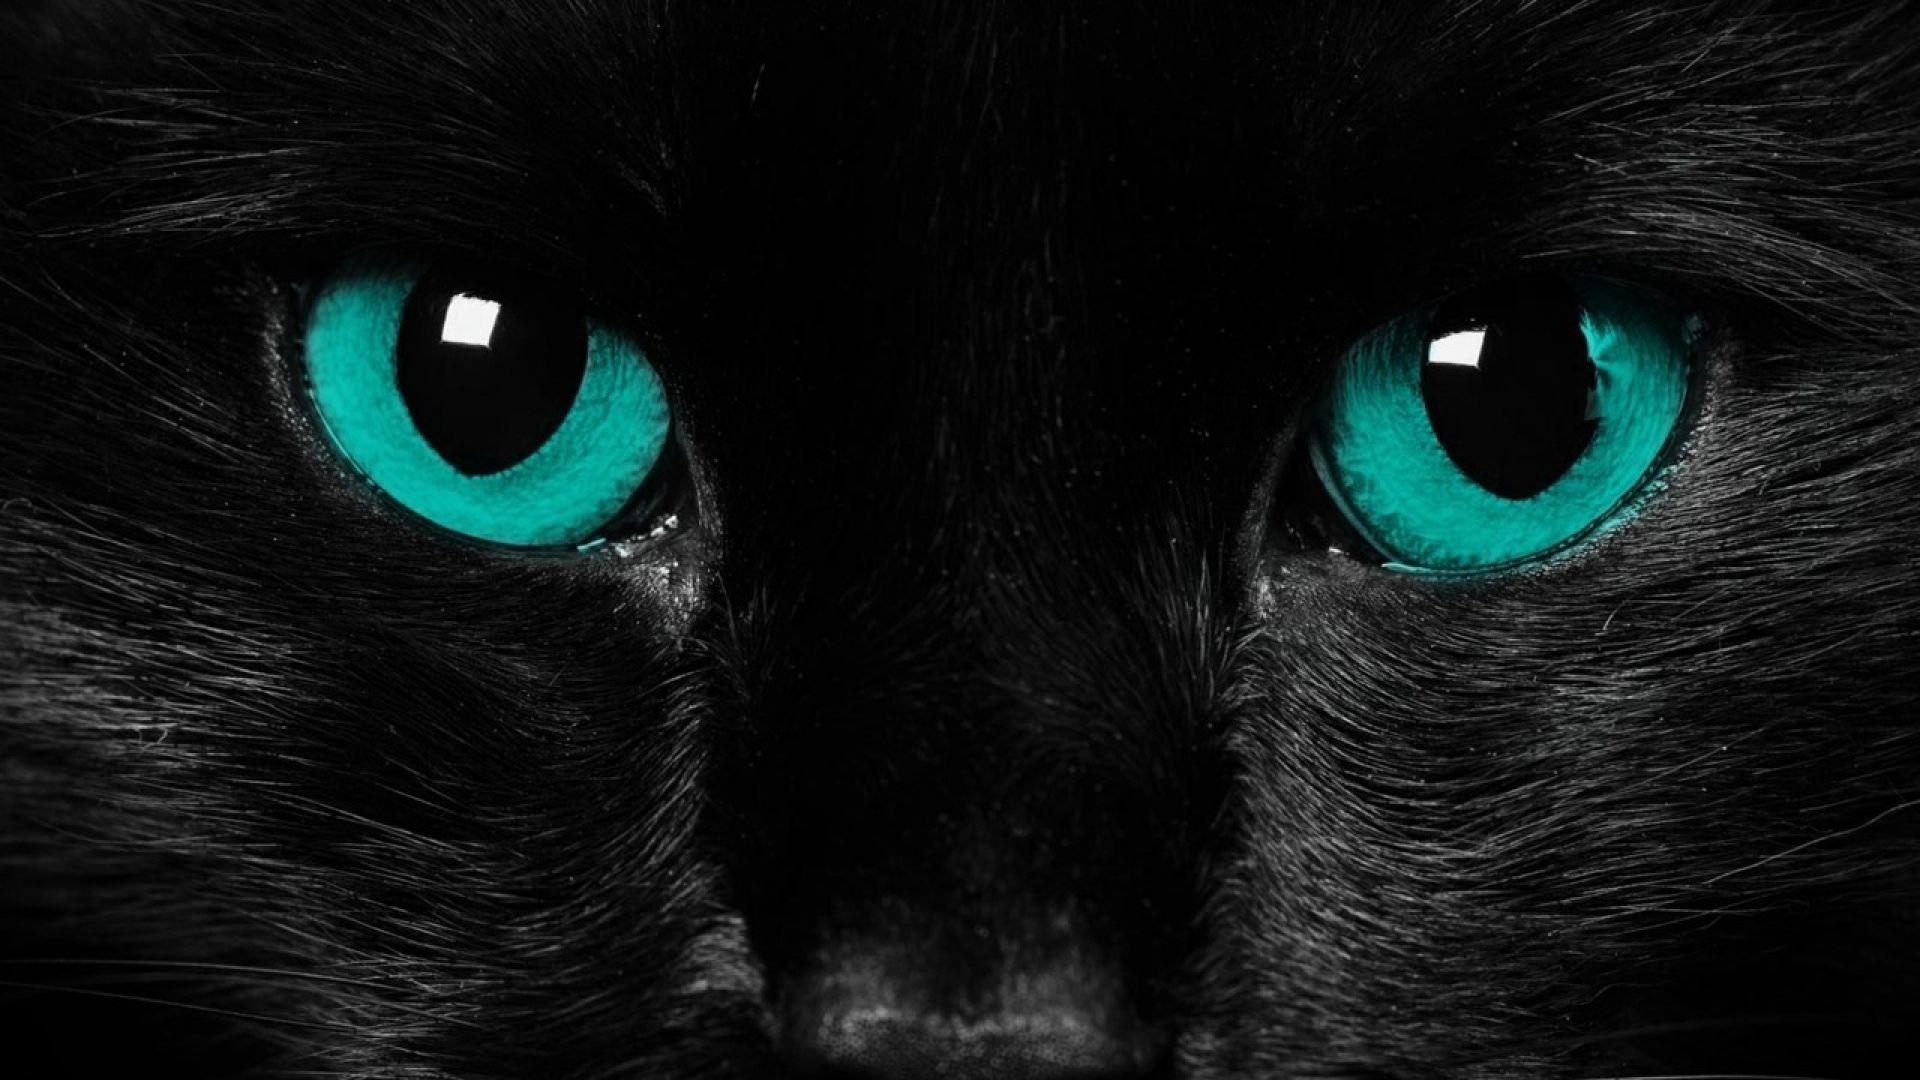 Download Wallpaper 1920x1080 Eyes, Black Cat, Close Up Full HD 1080p